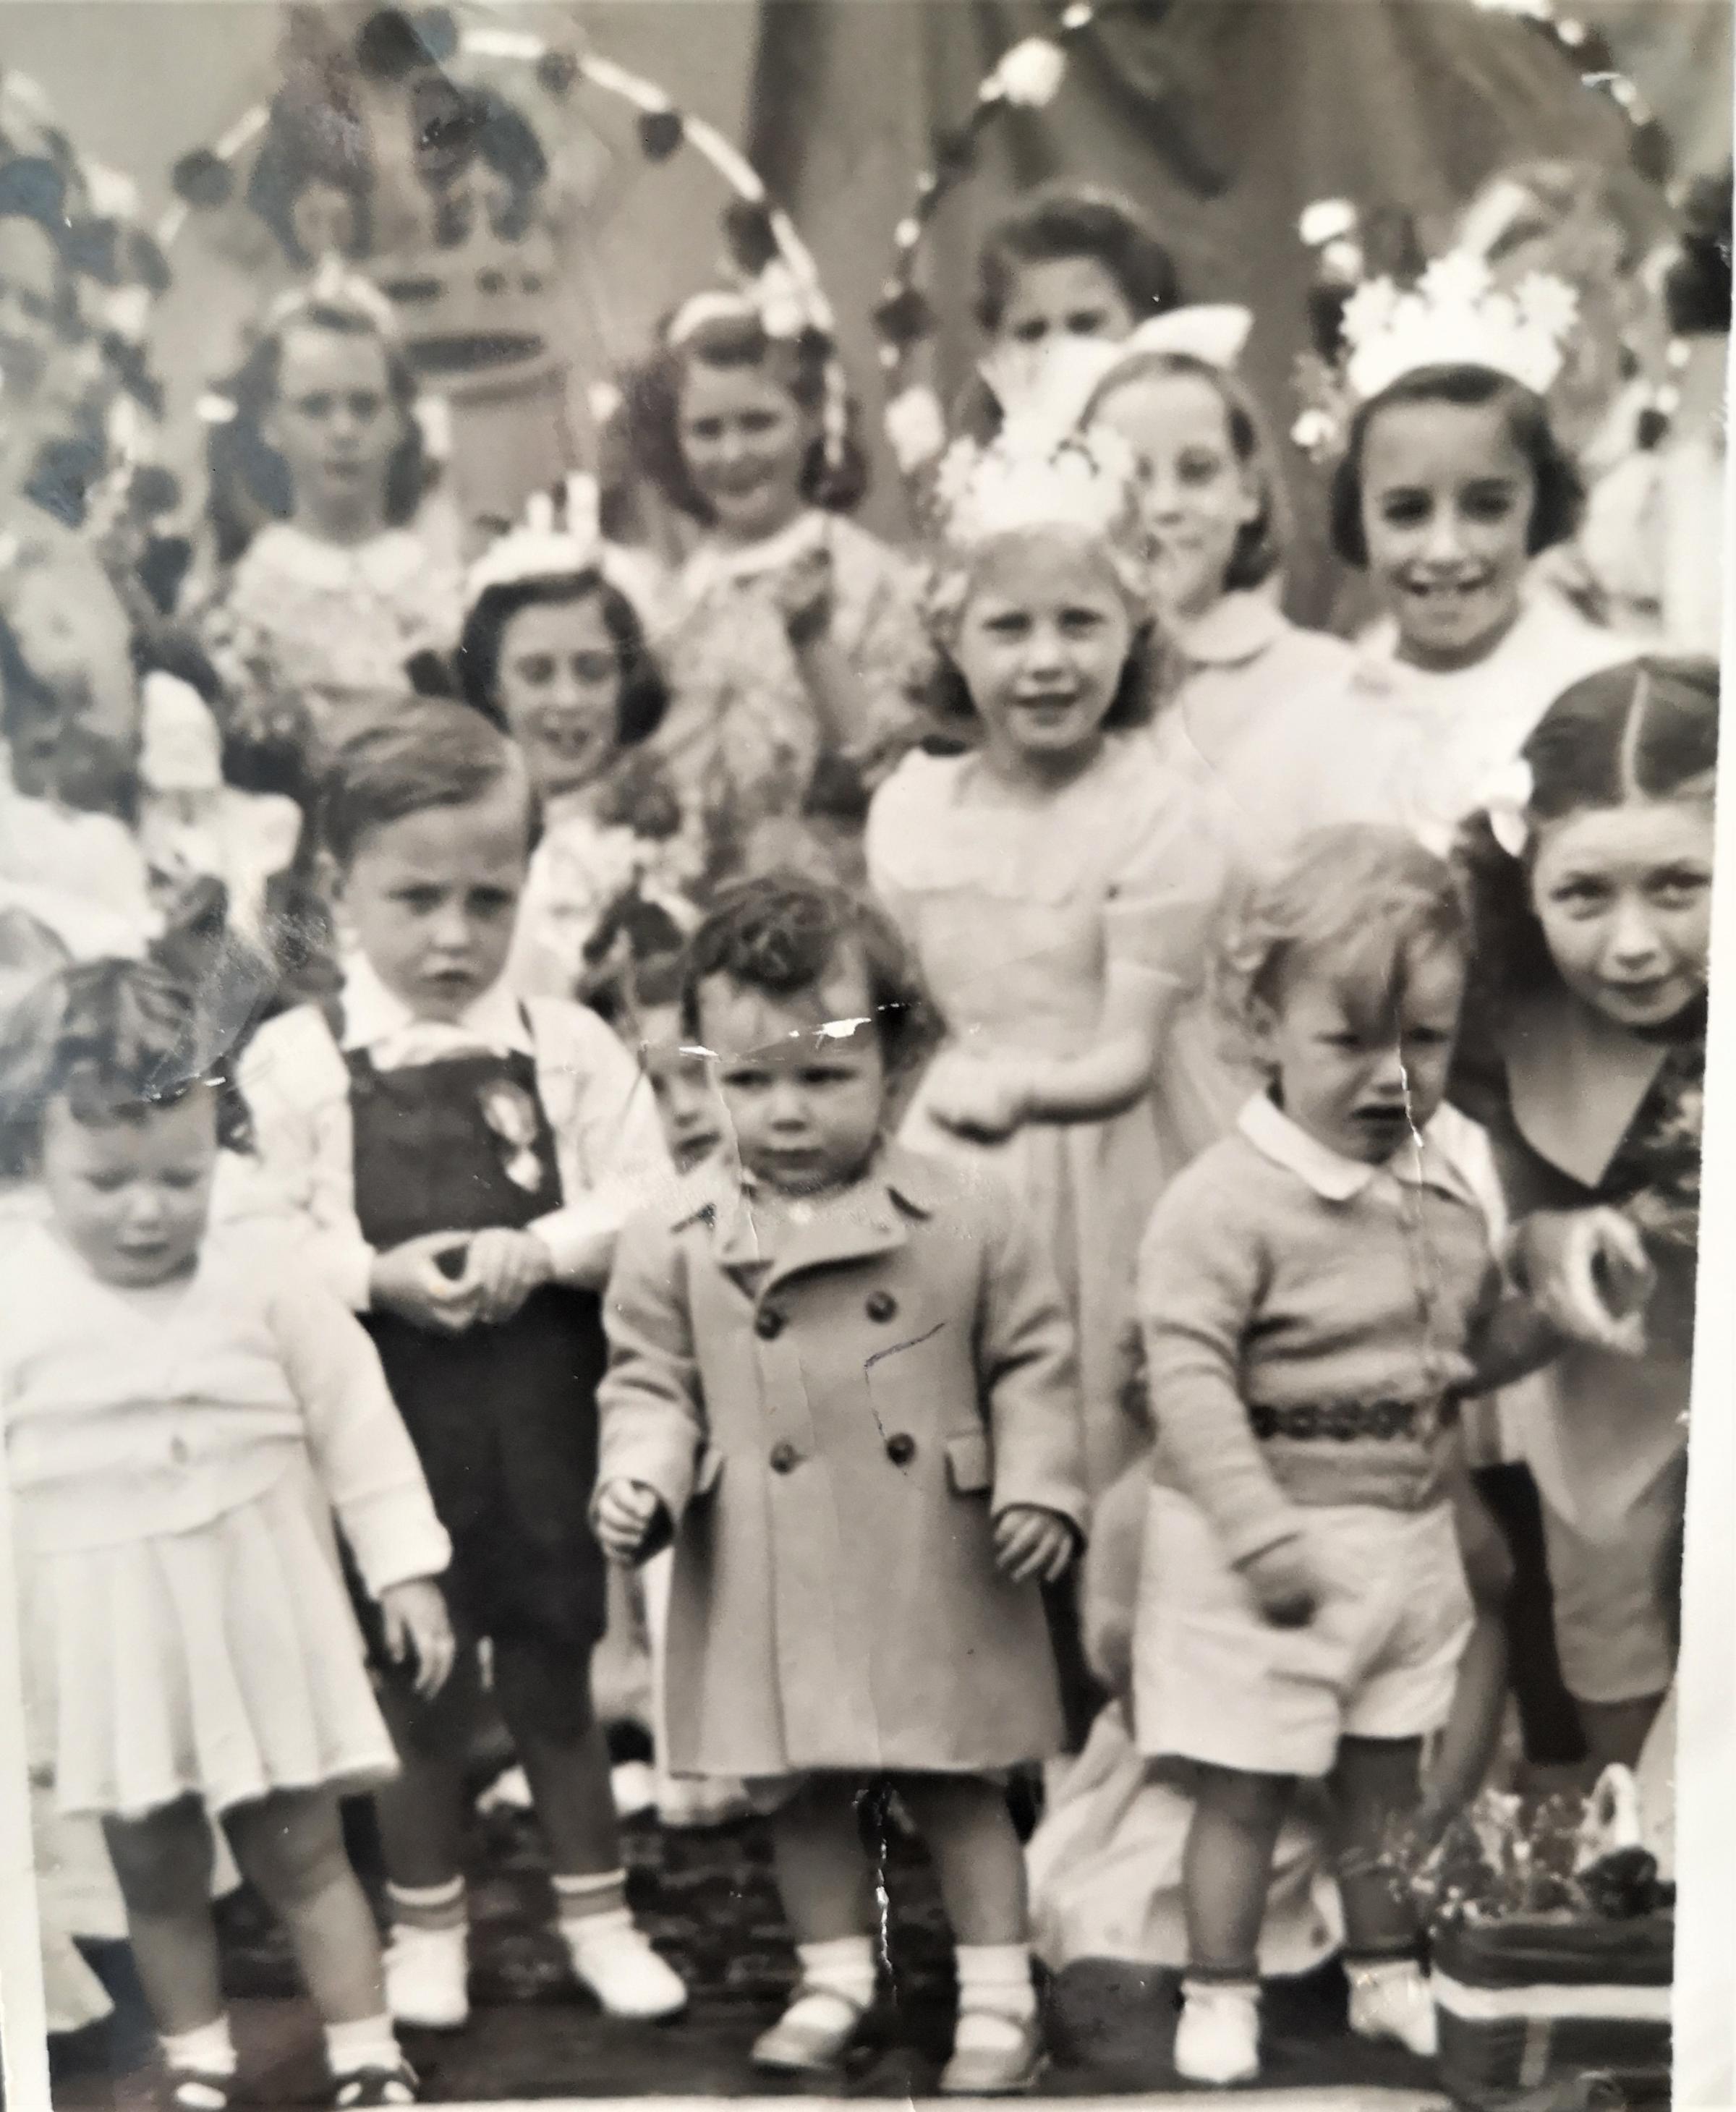 Queen Elizabeth Coronation celebrations at Parc Alun in Mold, 1953. Photo courtesy of Joan Evans